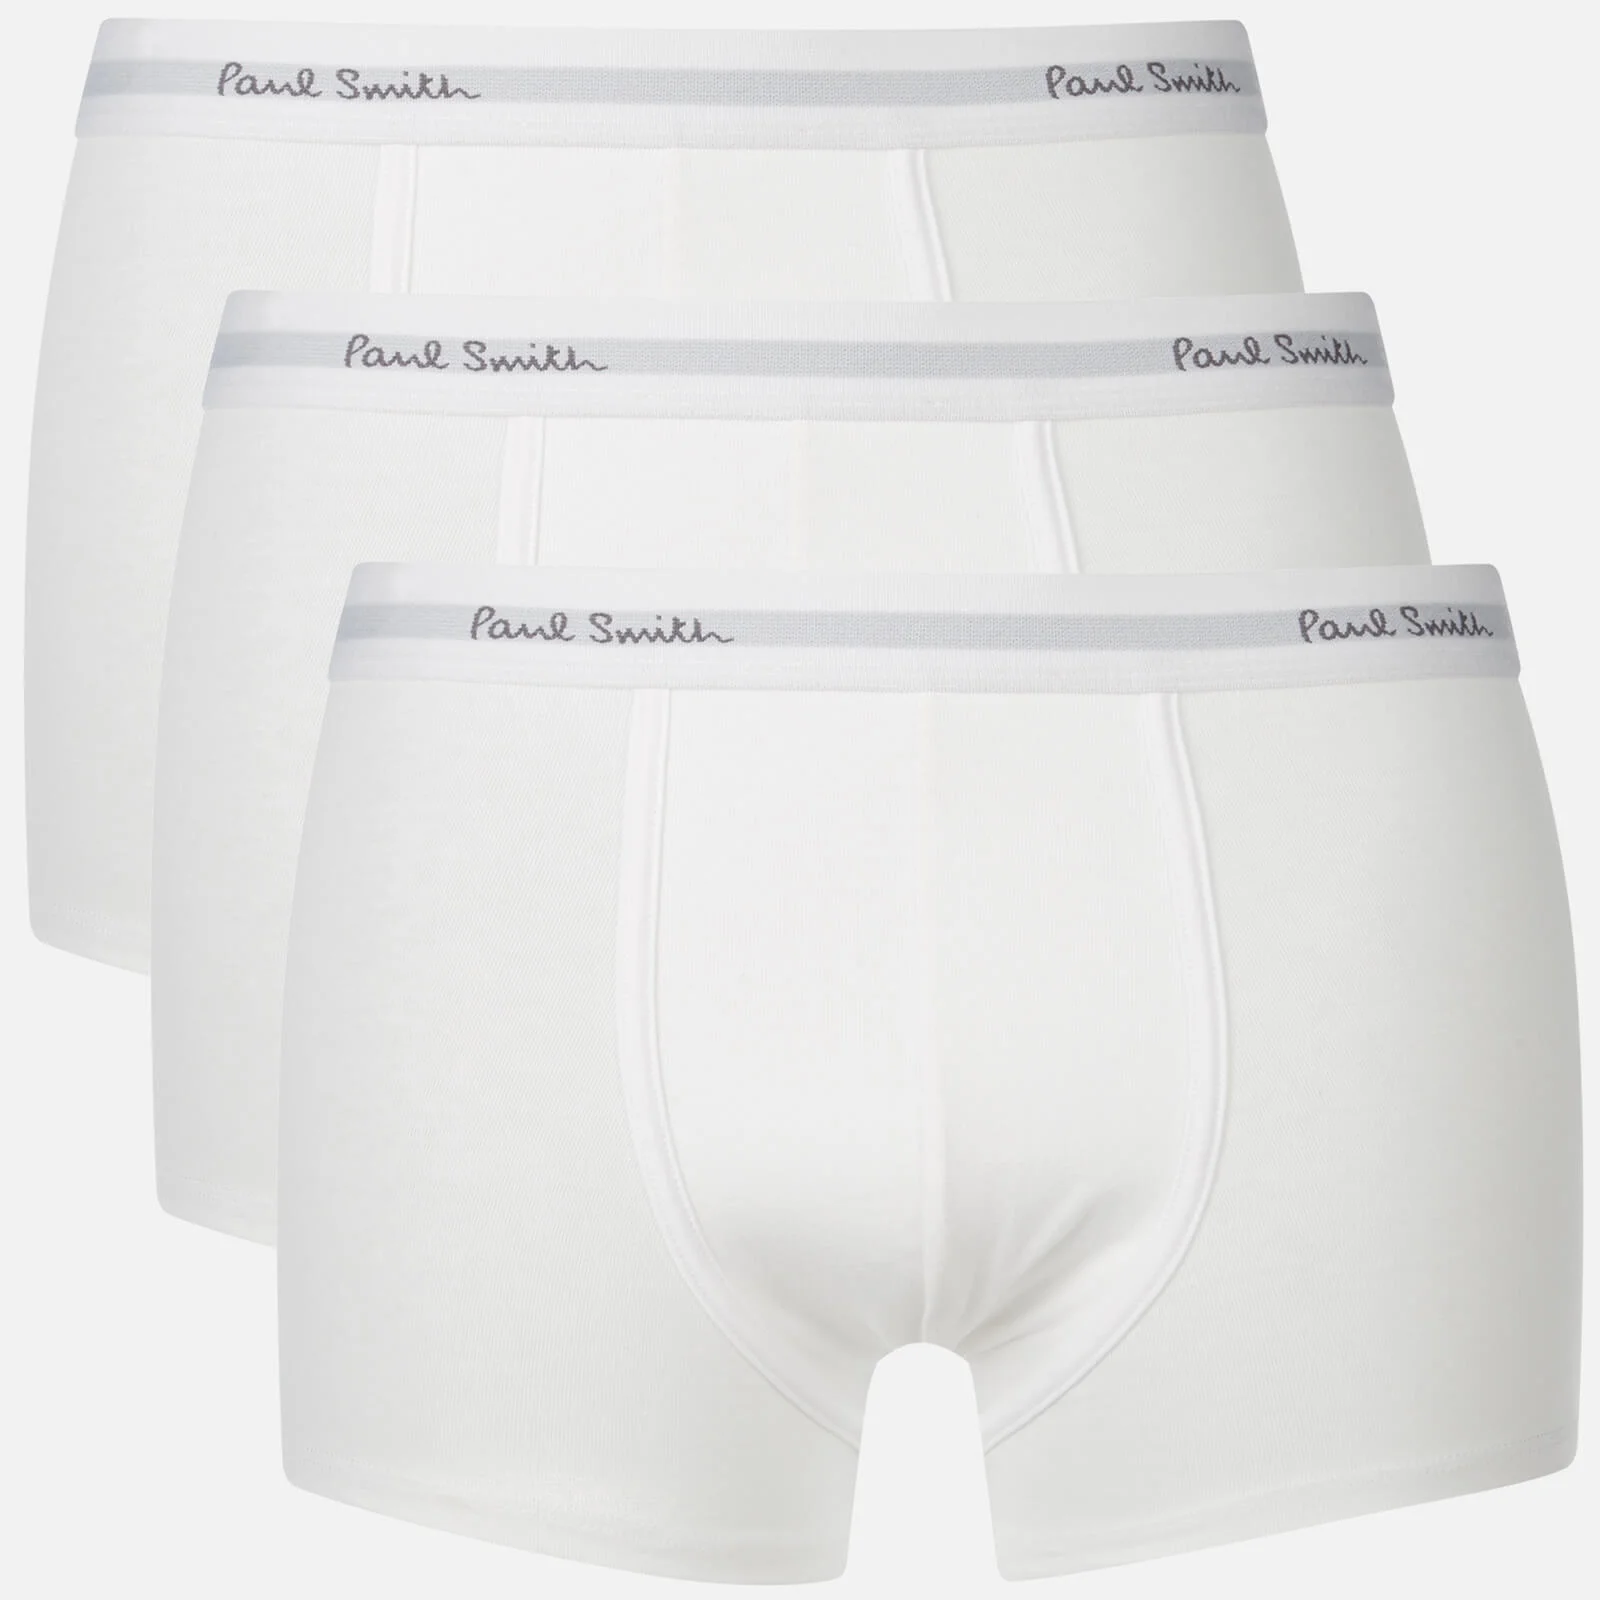 Paul Smith Men's 3 Pack Trunk Boxer Shorts - White Image 1